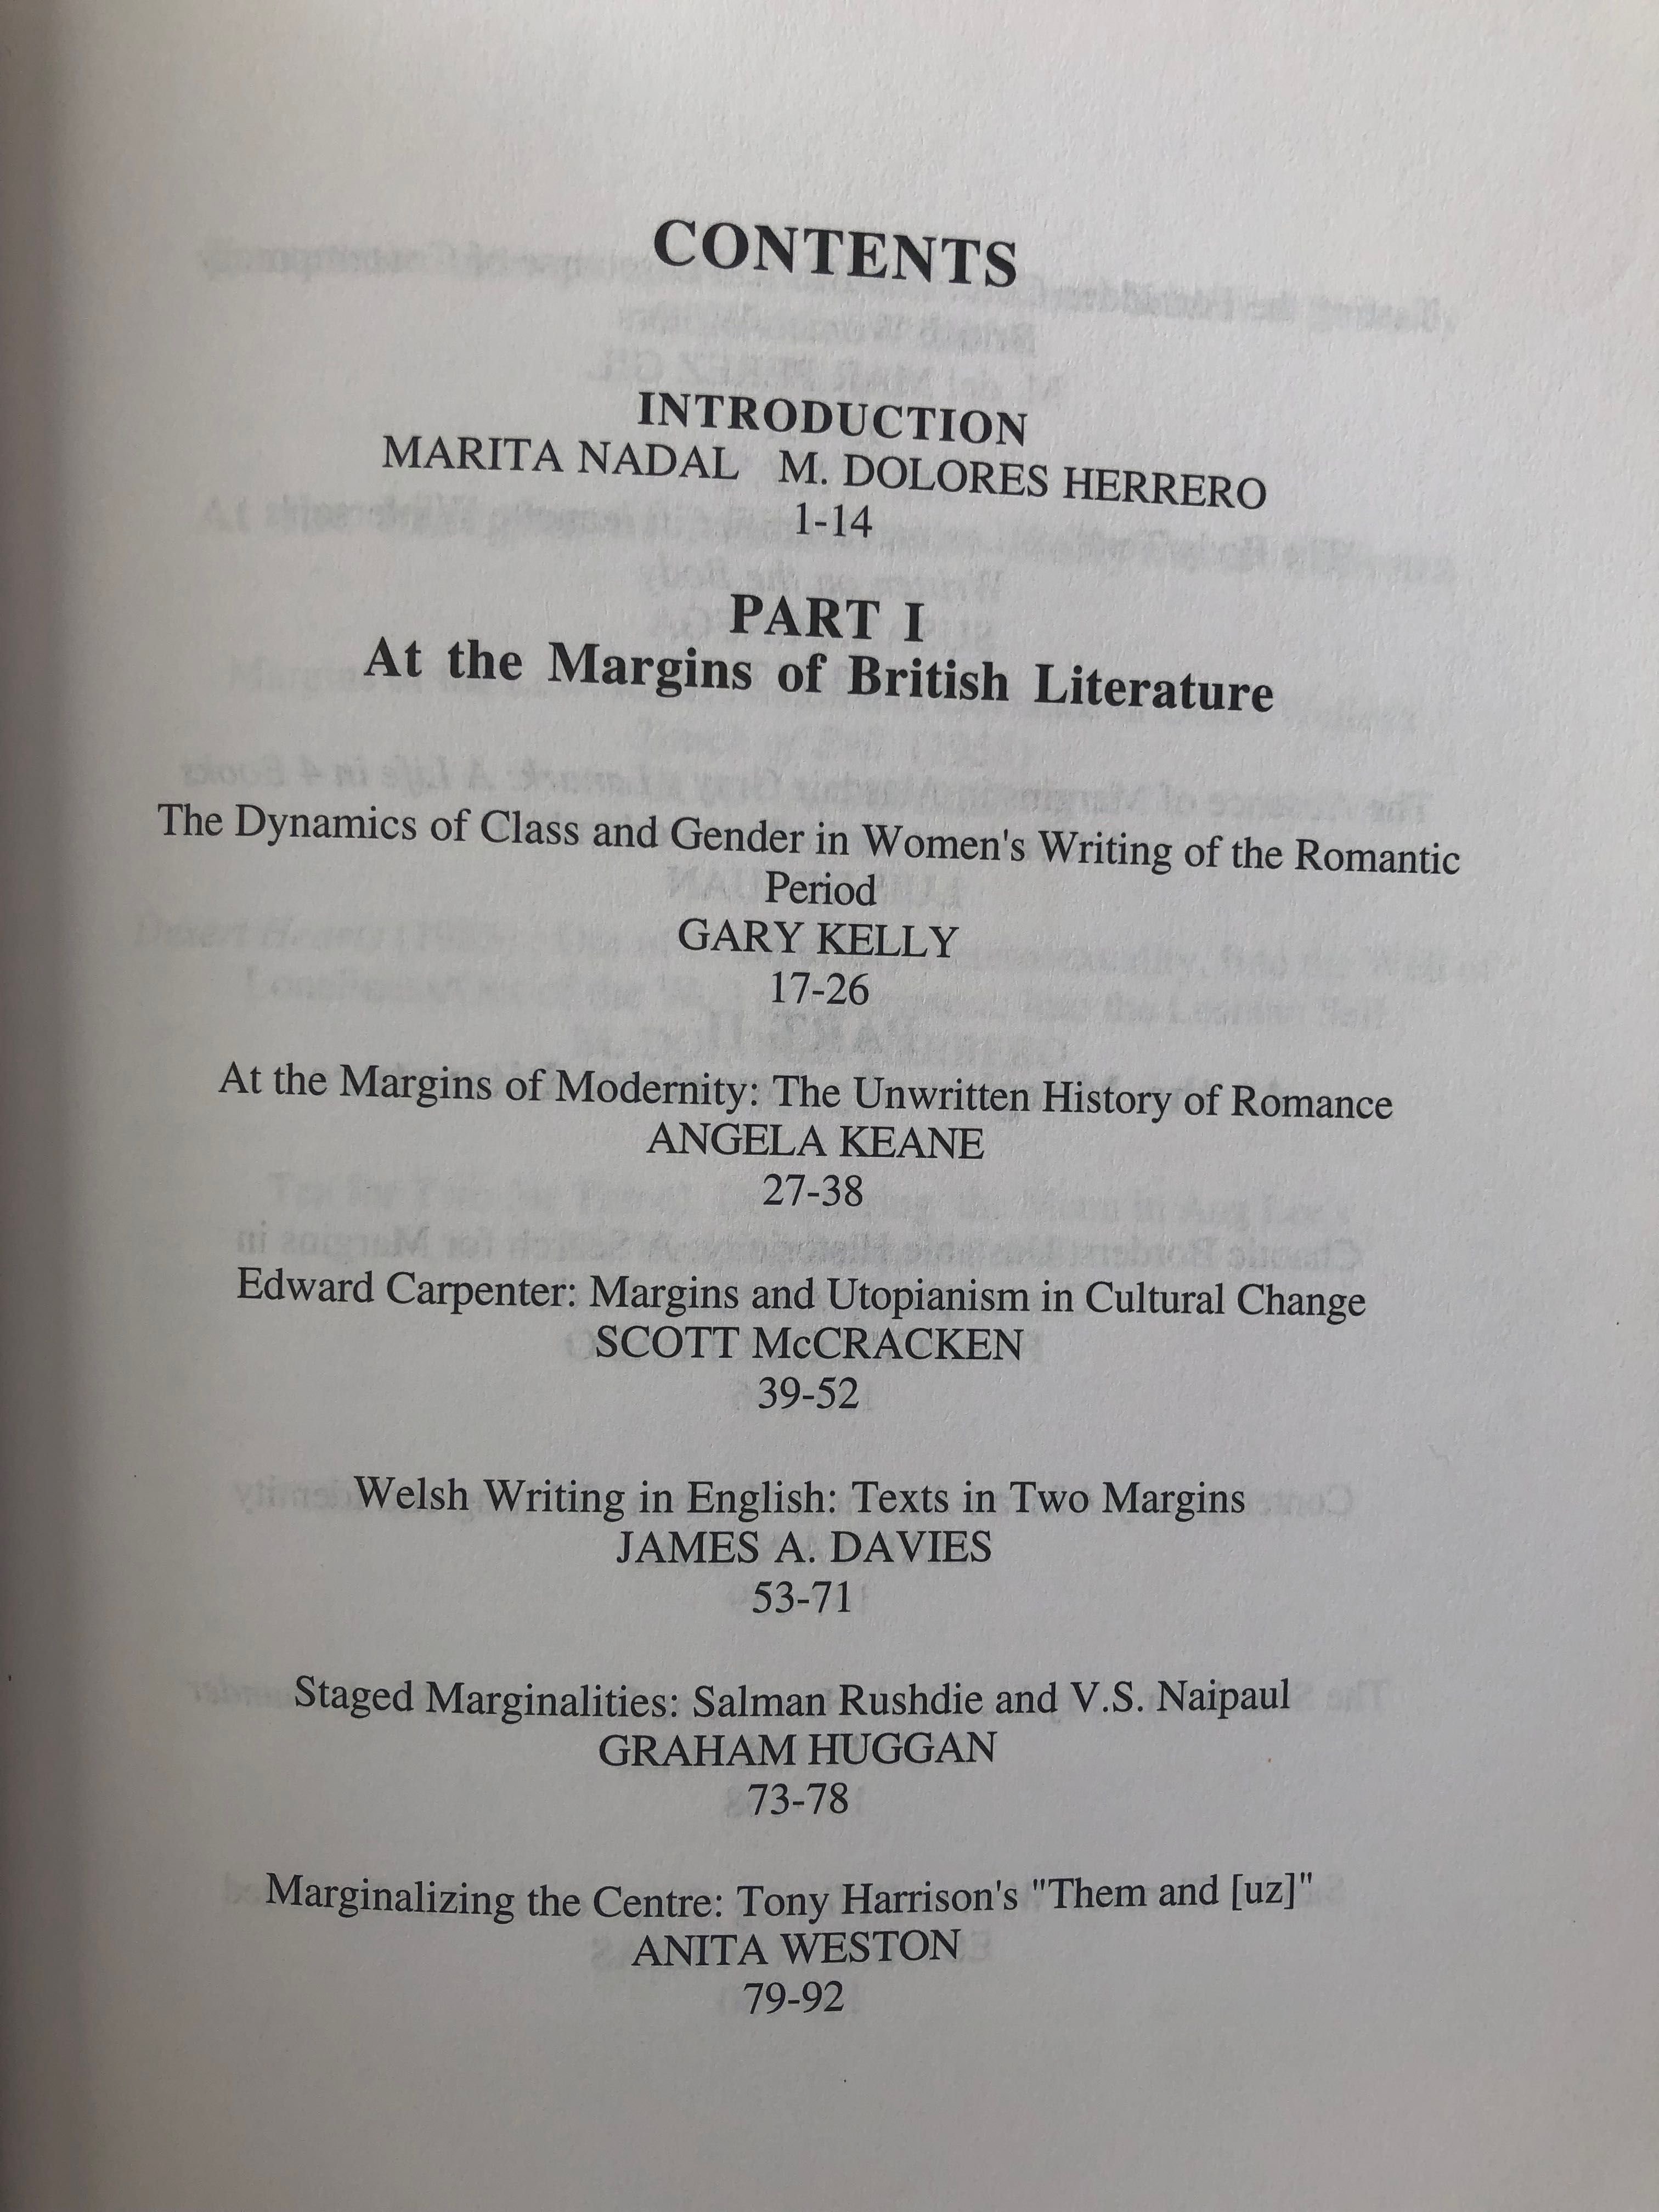 Margins in British and American Literature, Film and Culture